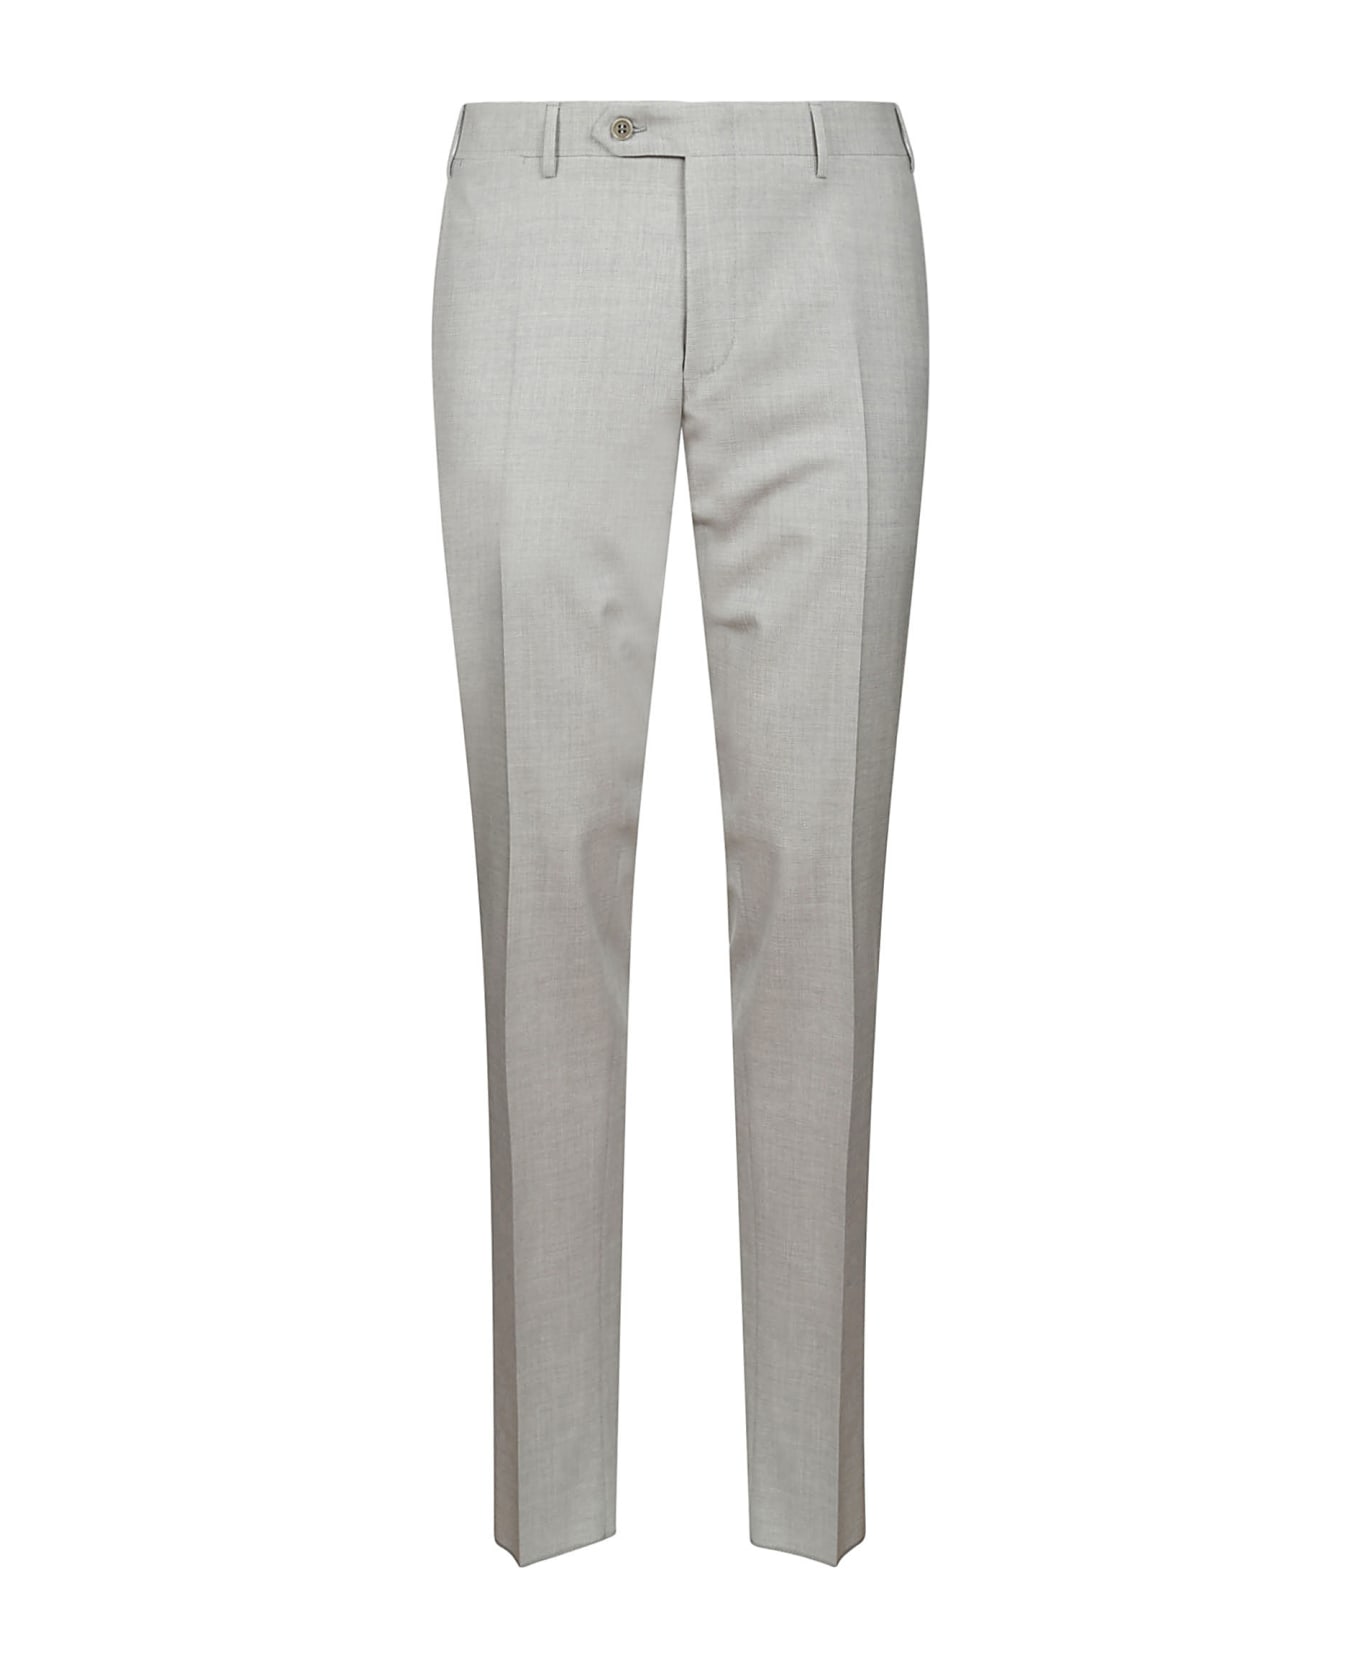 Canali Suit - Grey